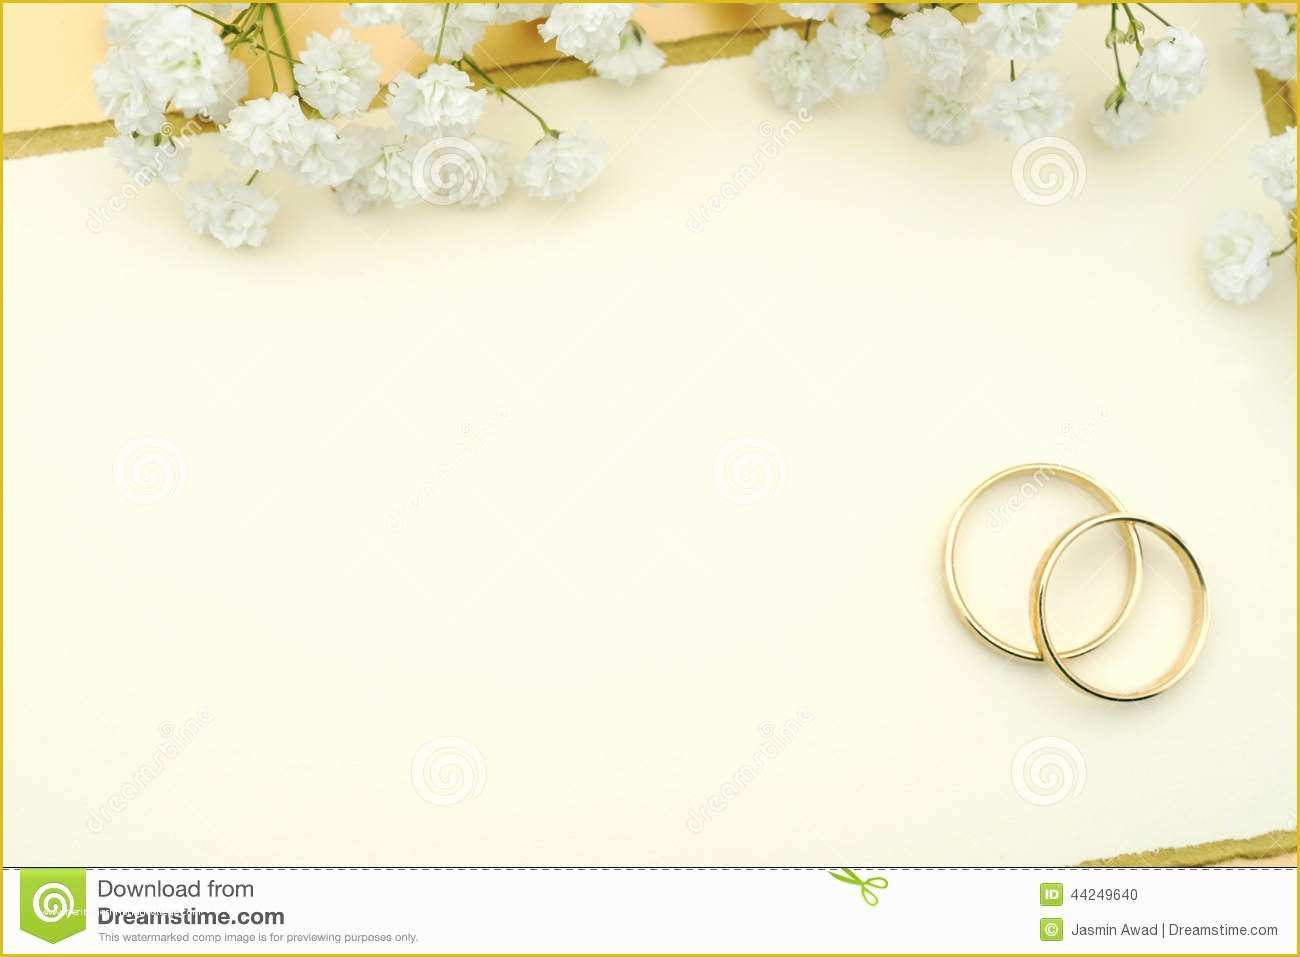 Free Wedding Design Templates Of Wedding Invitation Stock Image Ring Invi Free